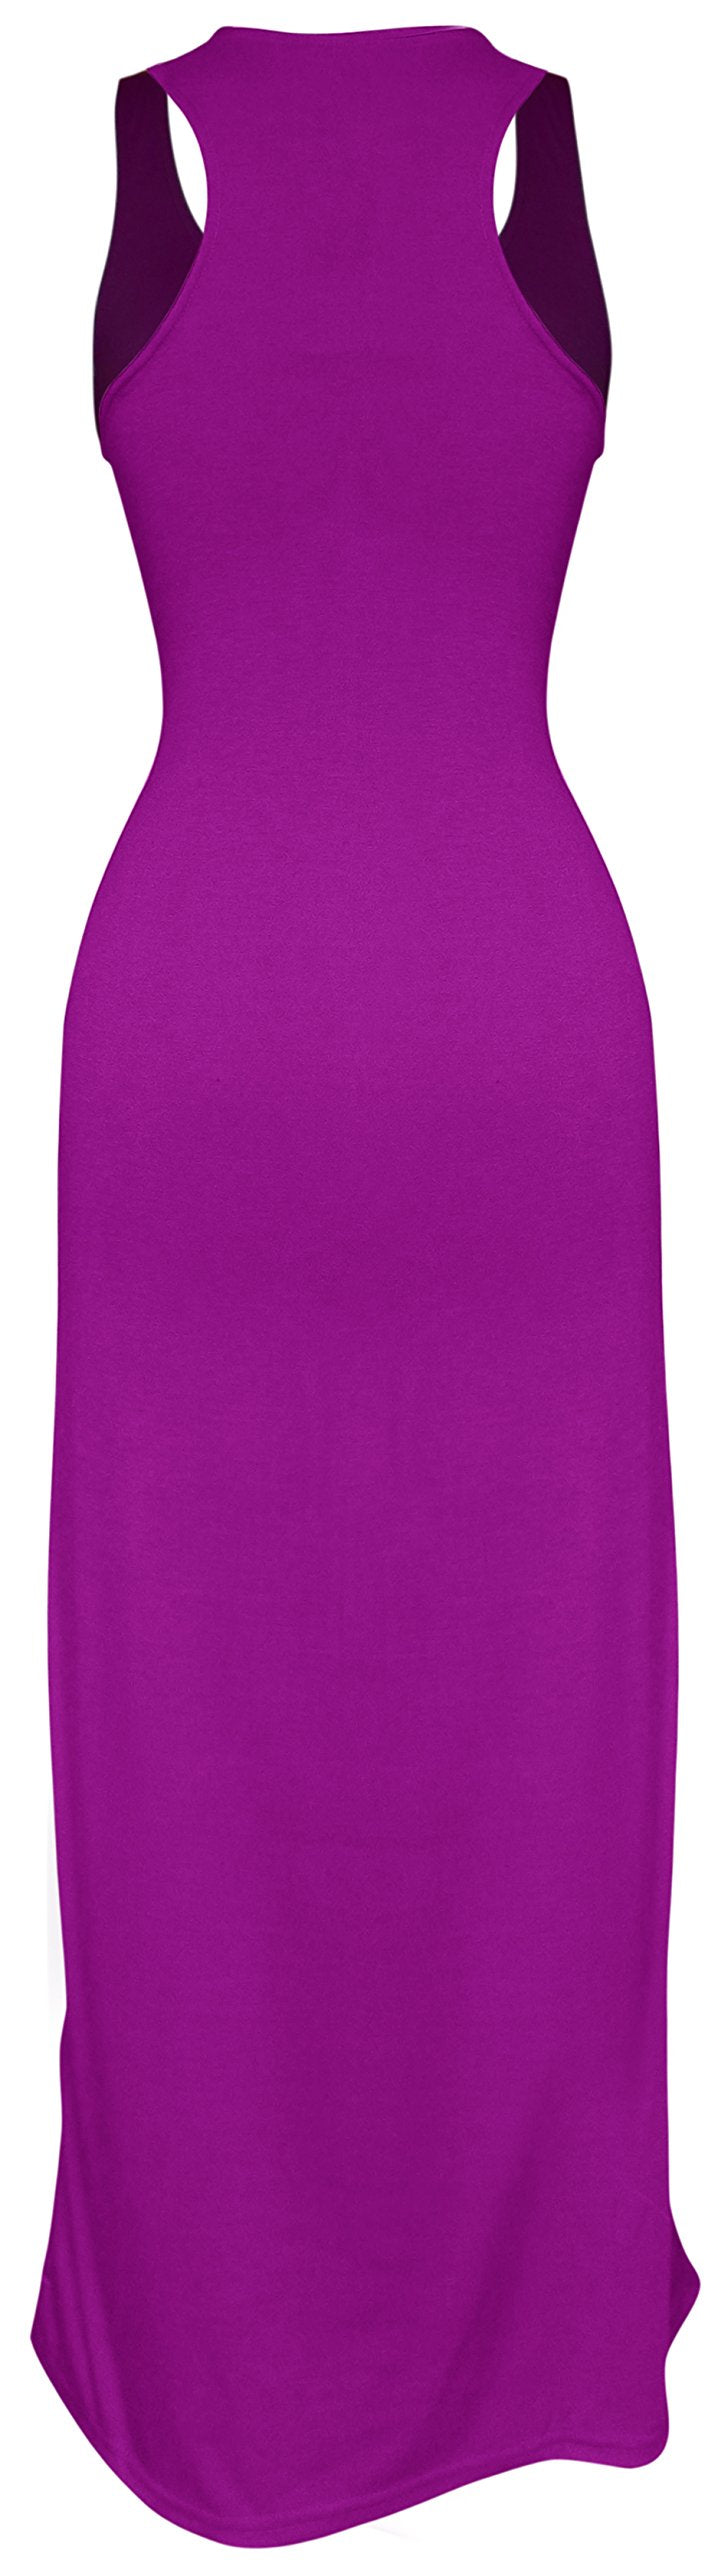 Racerback Summer Maxi Dress Striped Solid Sundress Purple L